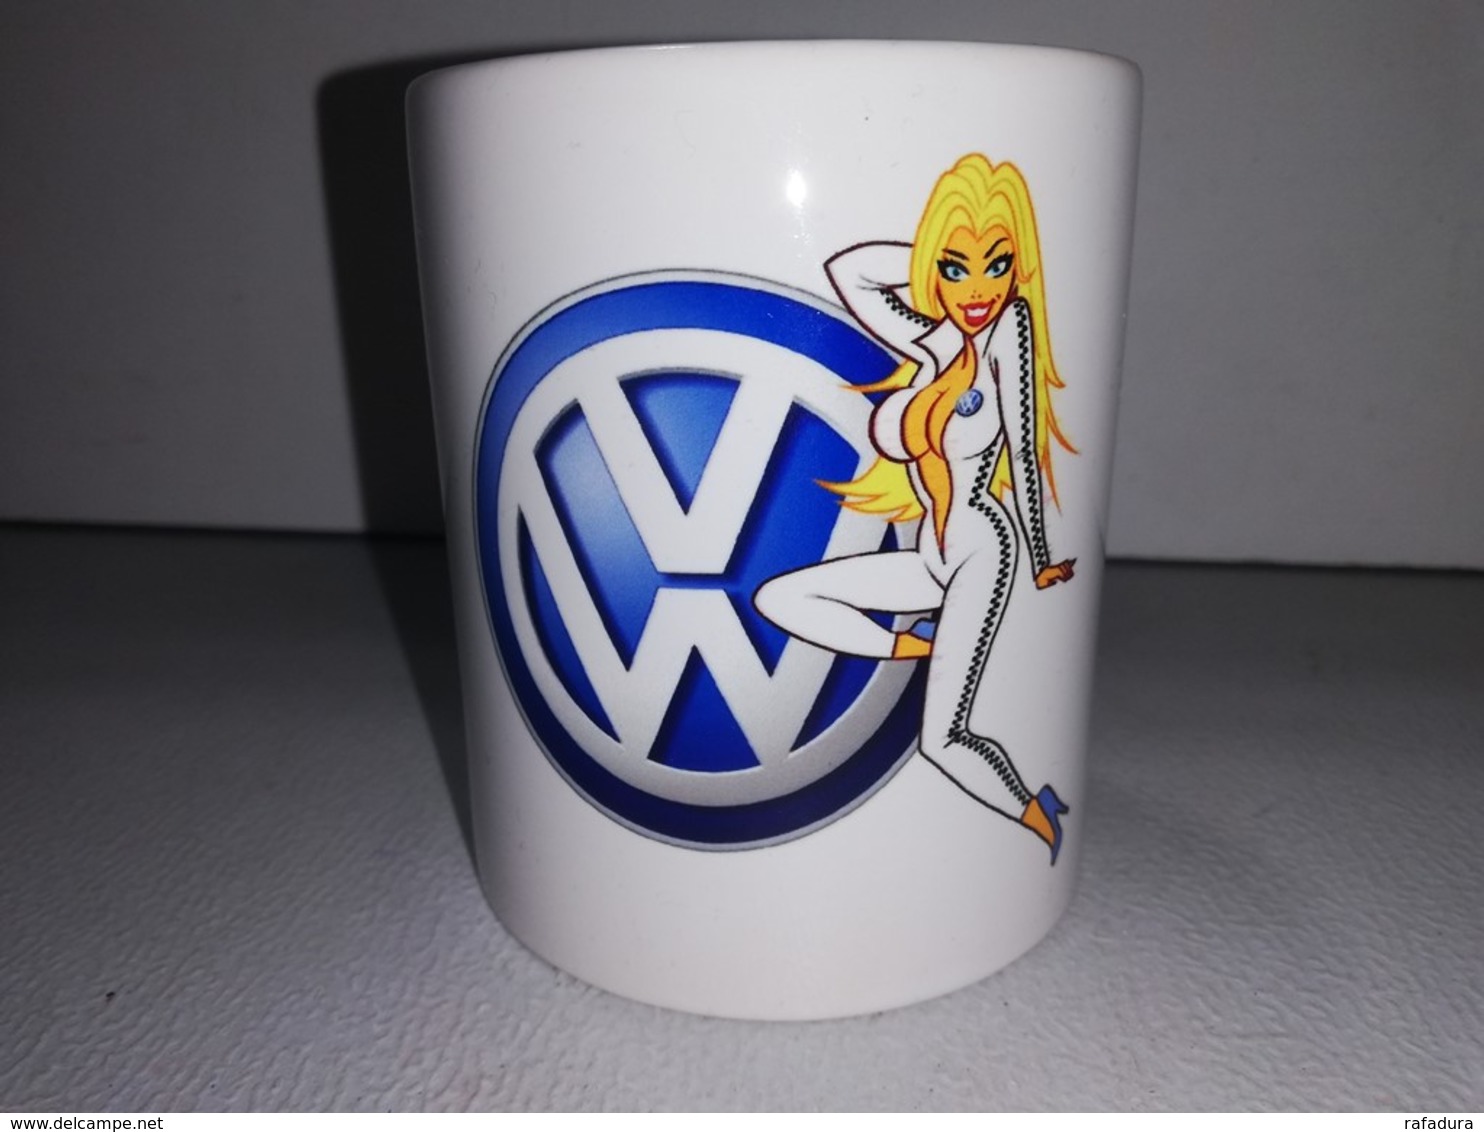 VOLKSWAGEN PIN UP COMBINAISON VW GOLF COX 1303 TASSE Ceramique MUG COFFEE NOEL - Veicoli